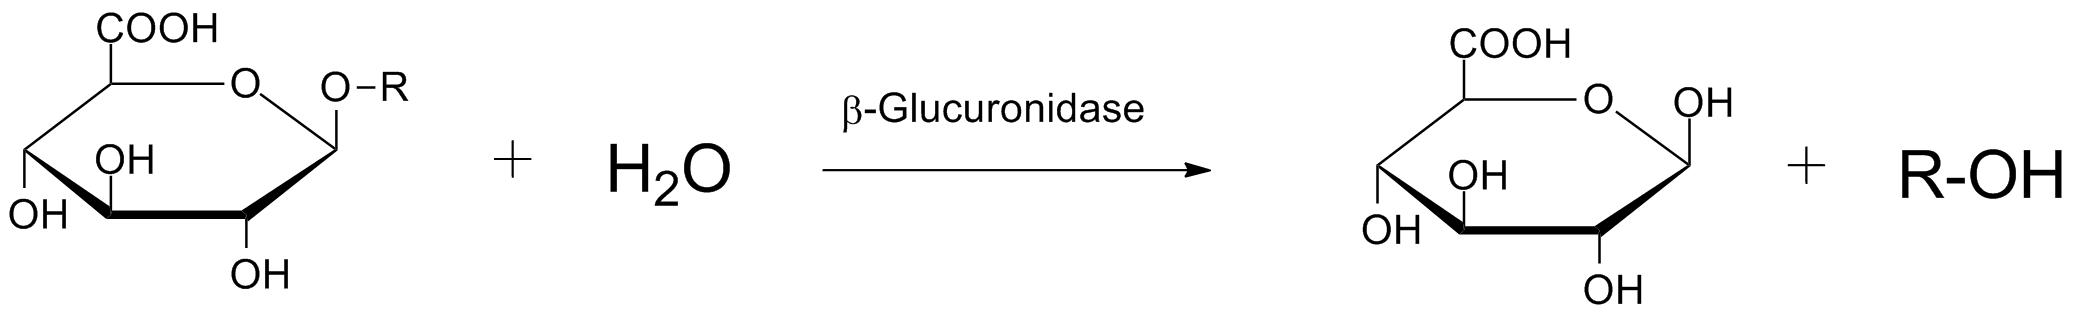 Beta Glucuronidase Mechanism